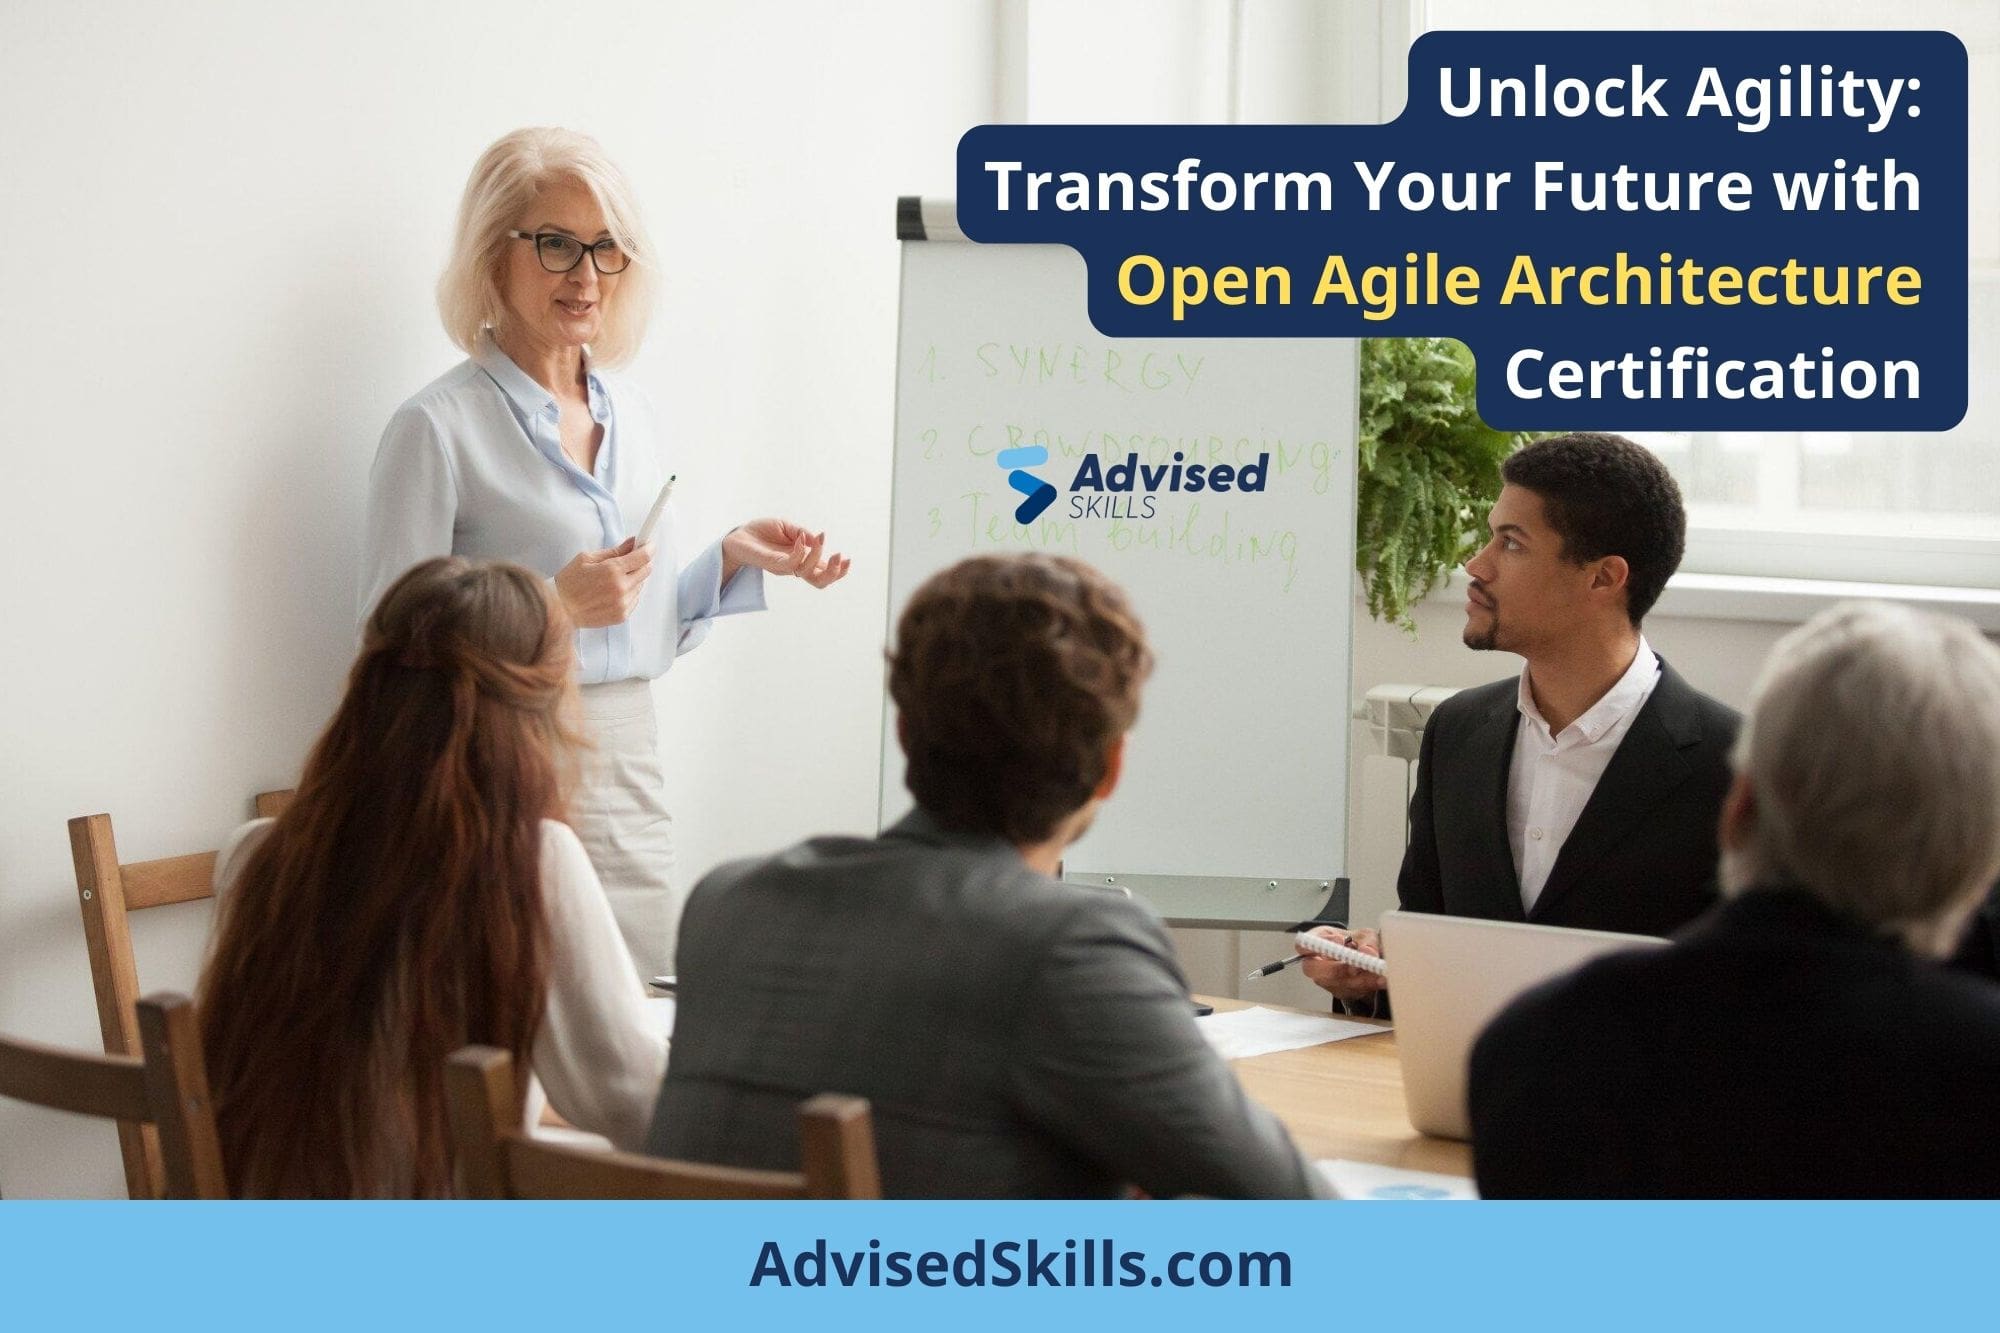 Open Agile Architecture Certification